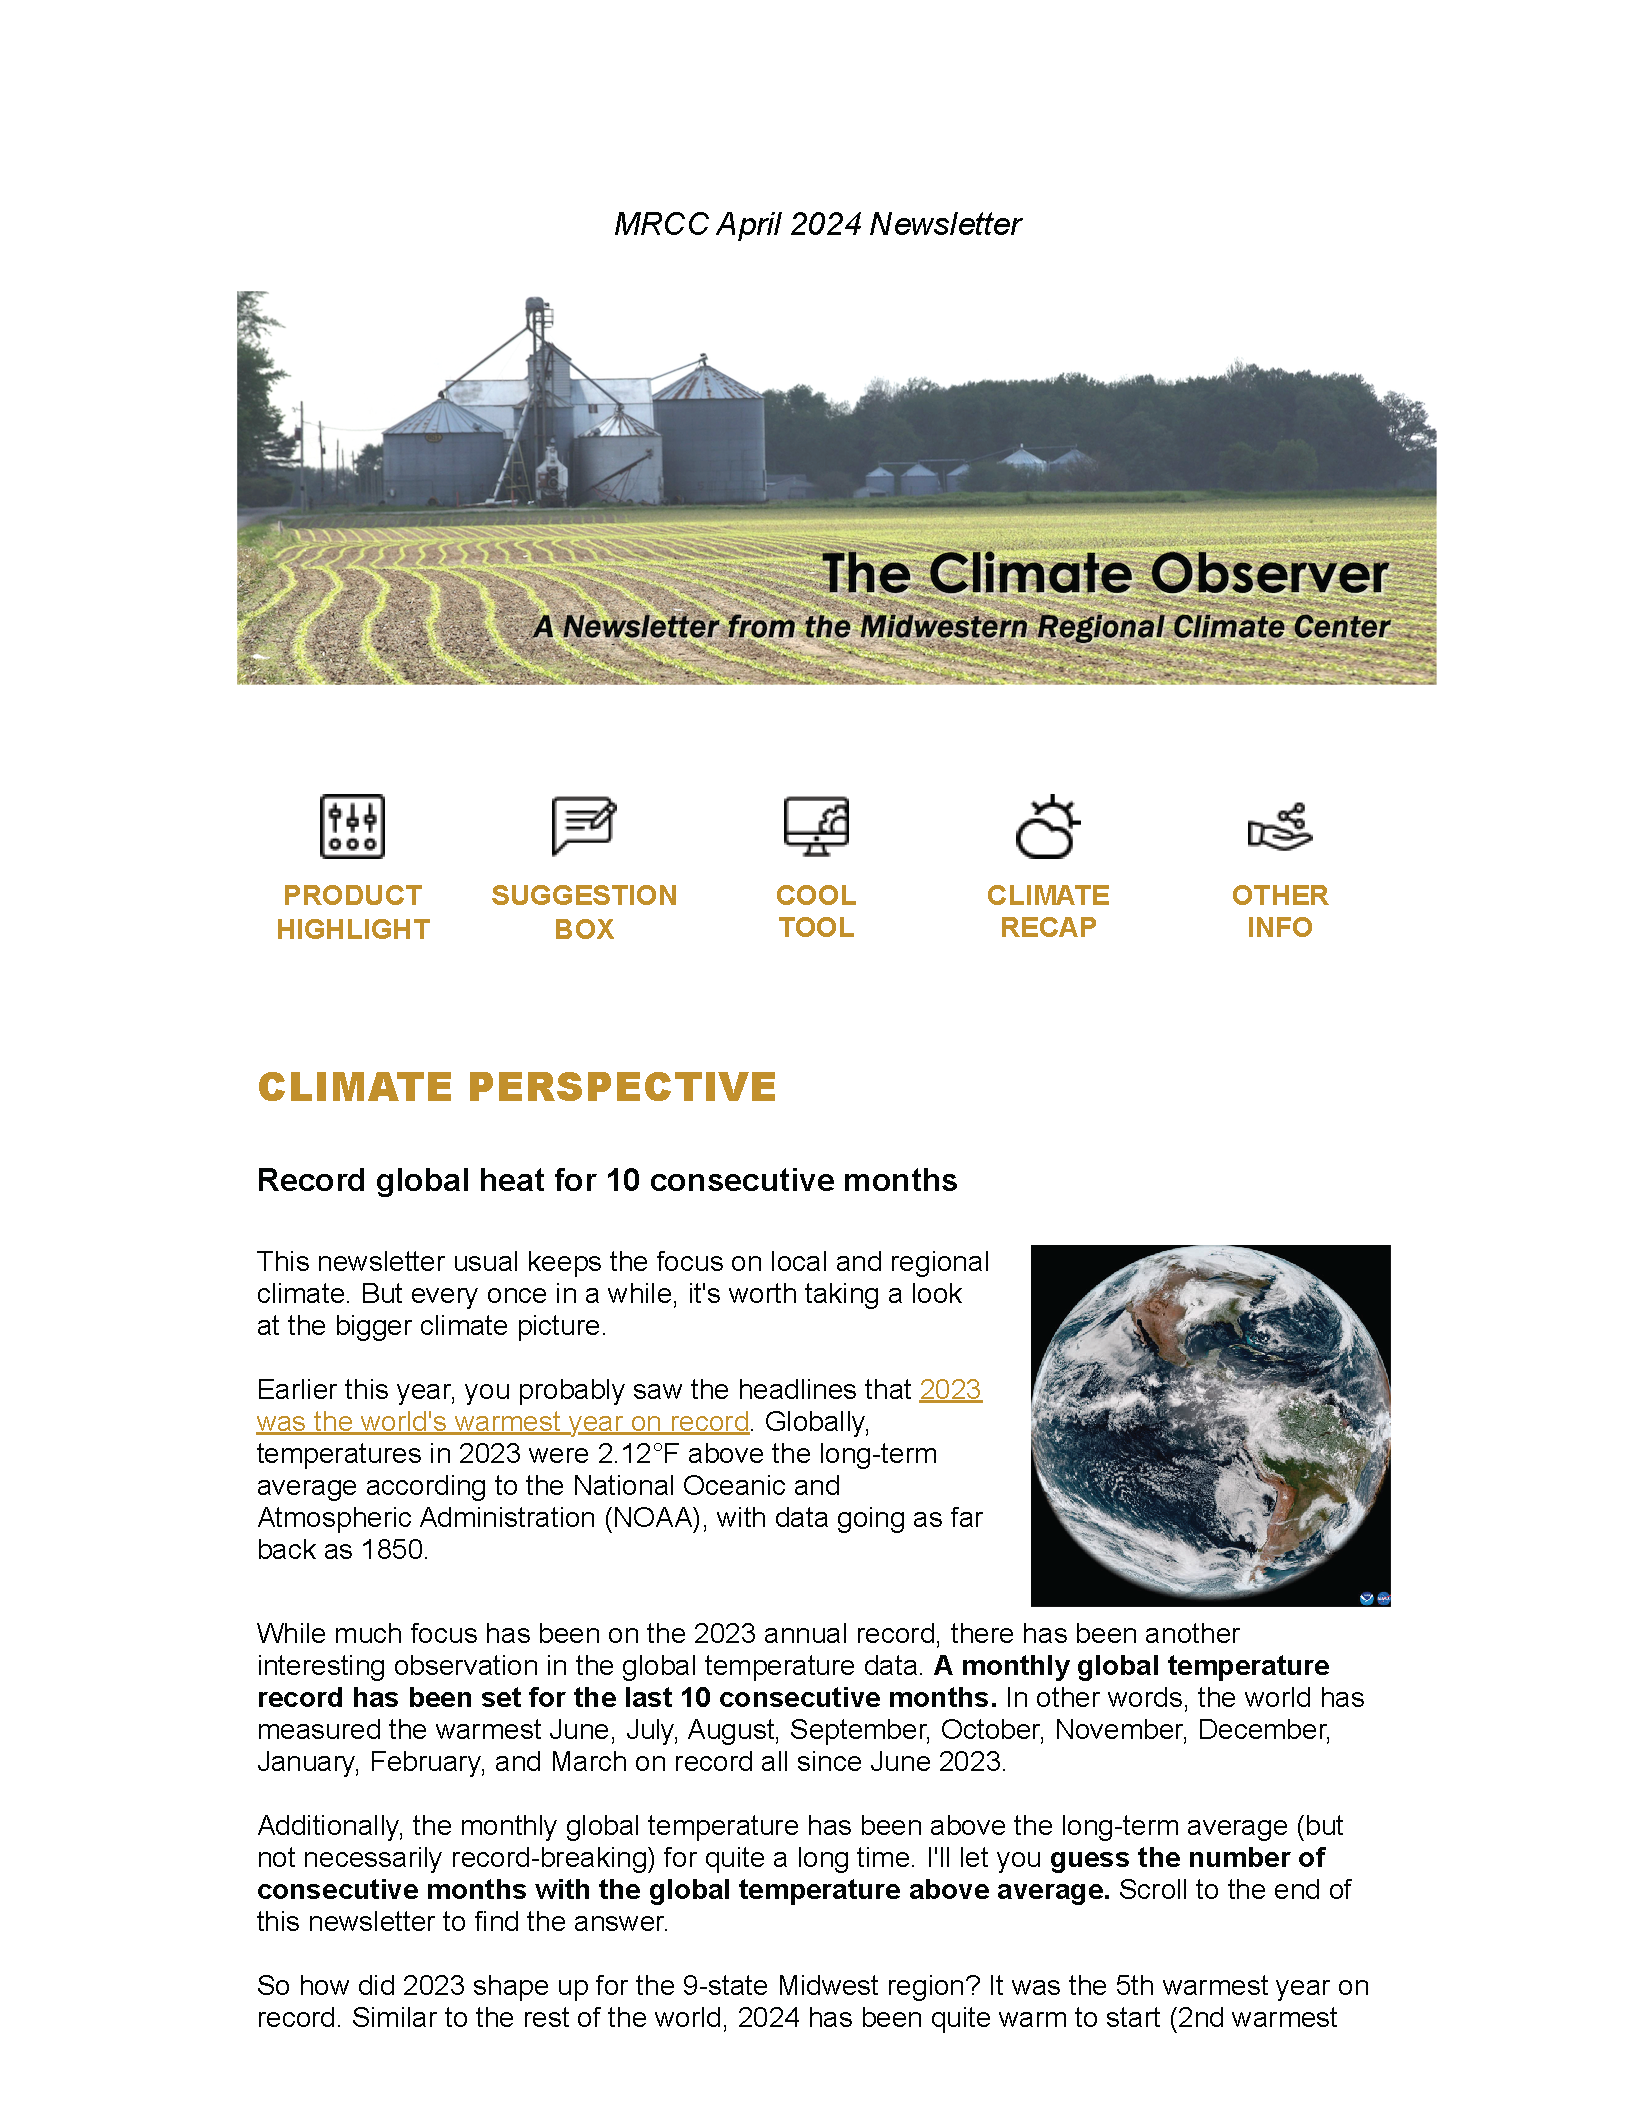 April 2024 "The Climate Observer"